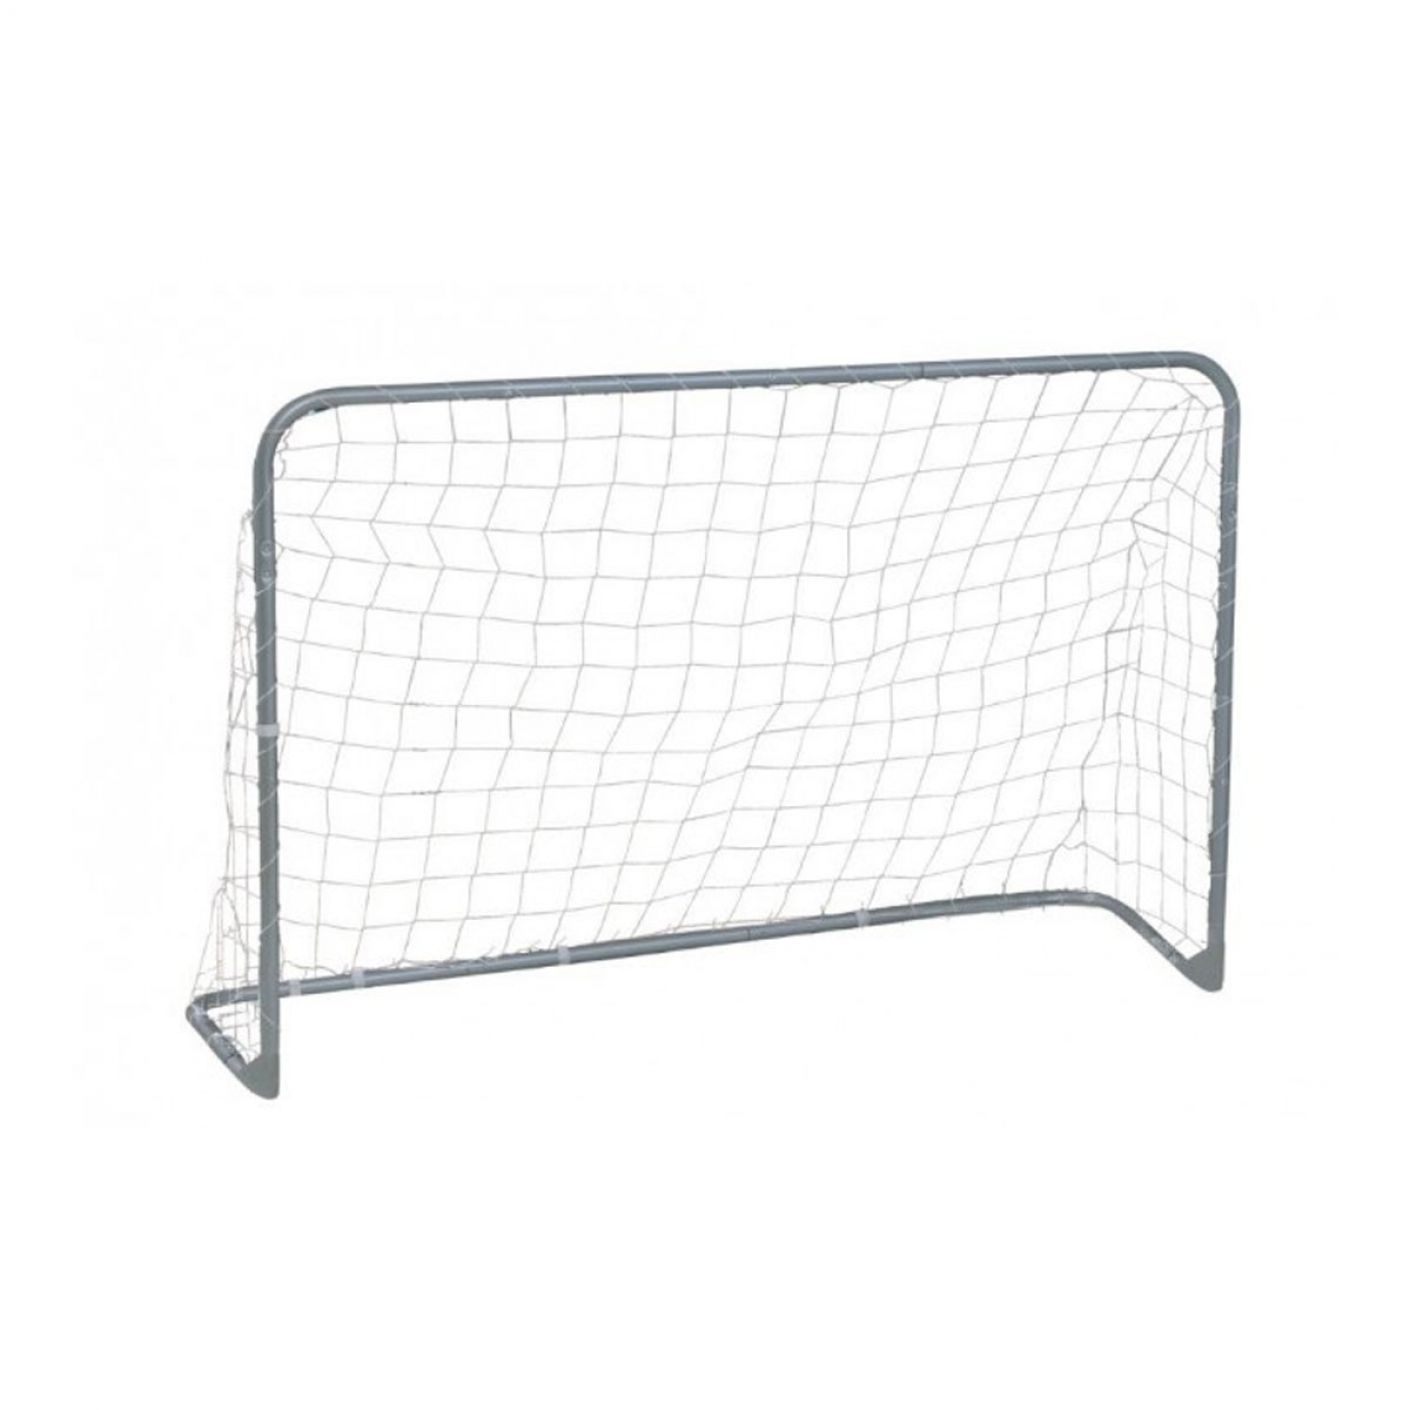 Garlando - Foldy Goal Soccer Goal 180x120 cm. with folding structure